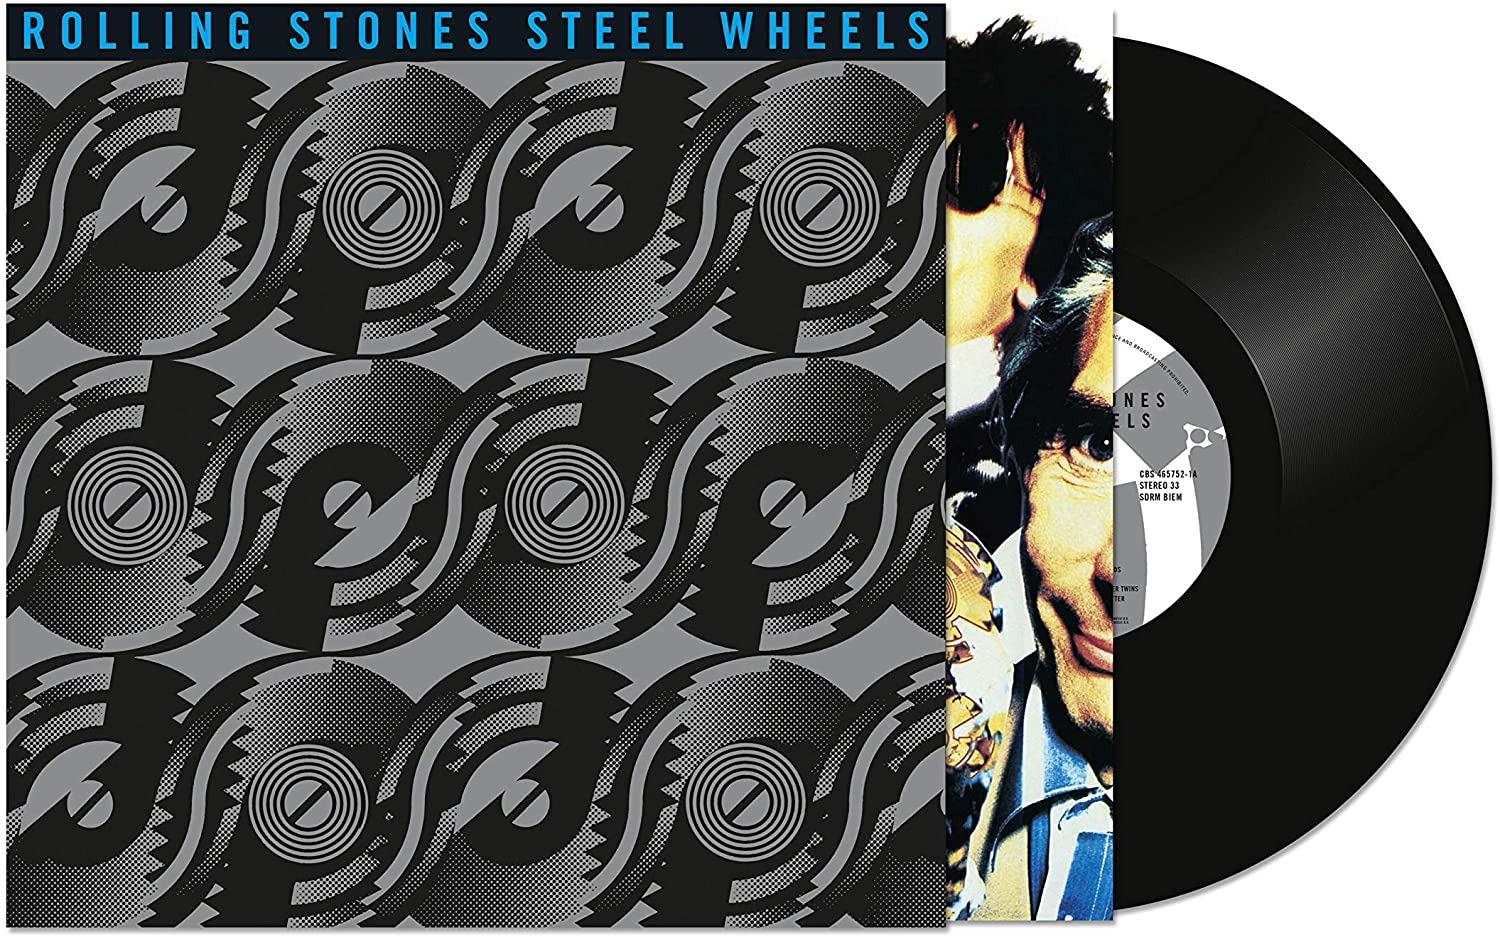 Steel Wheels - Vinyl | The Rolling Stones image1